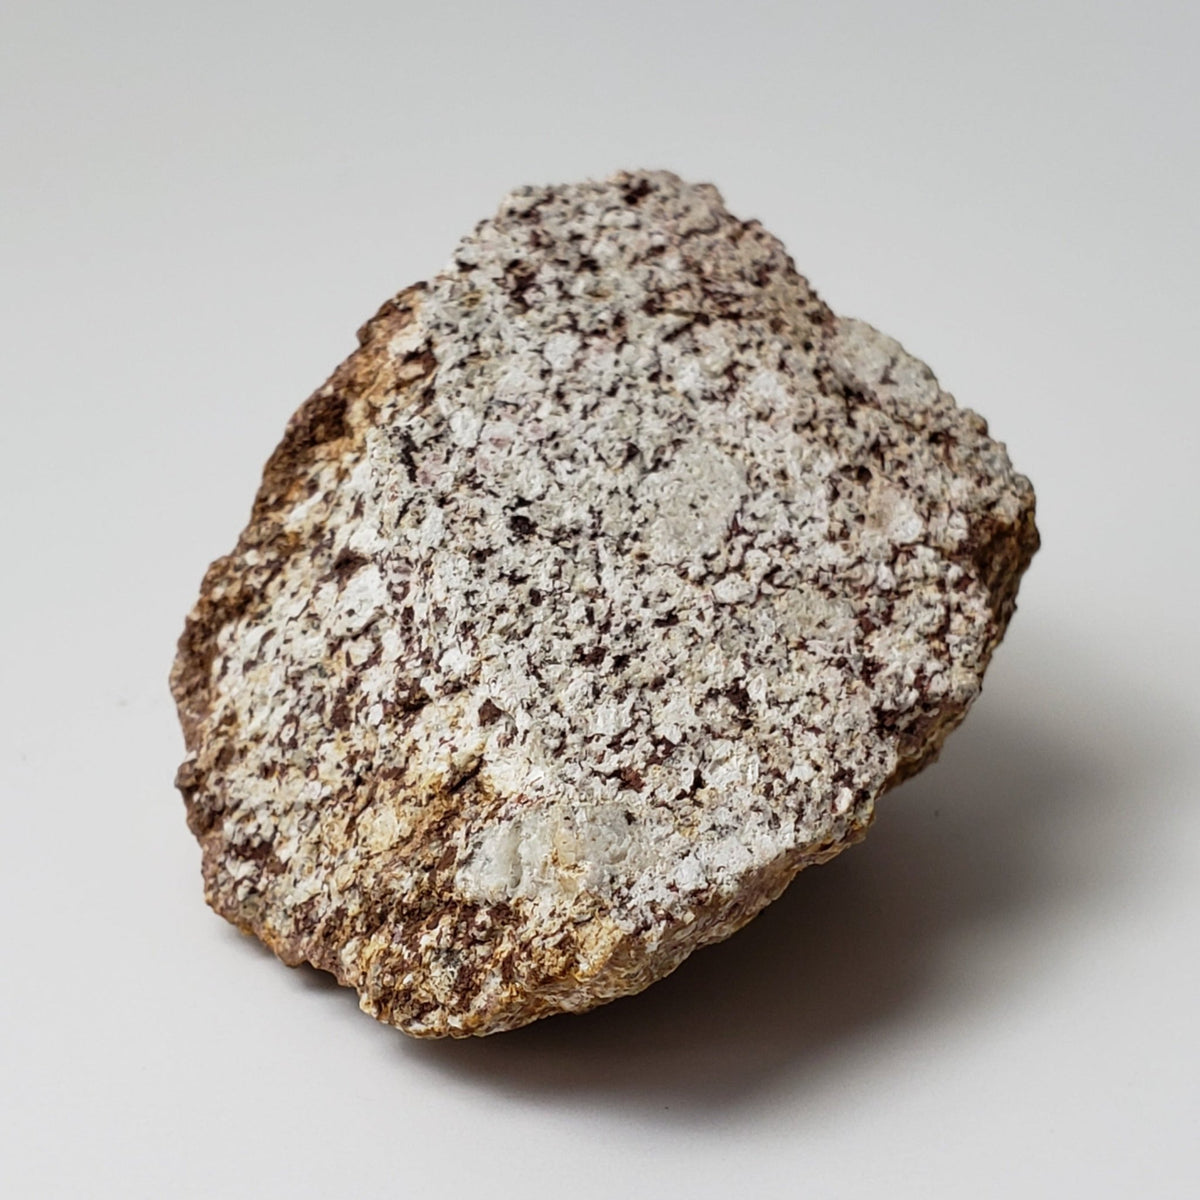 Impact Melt Rock | Polsingen Quarry | 25.33 grams | Ries Crater Germany | Canagem.com